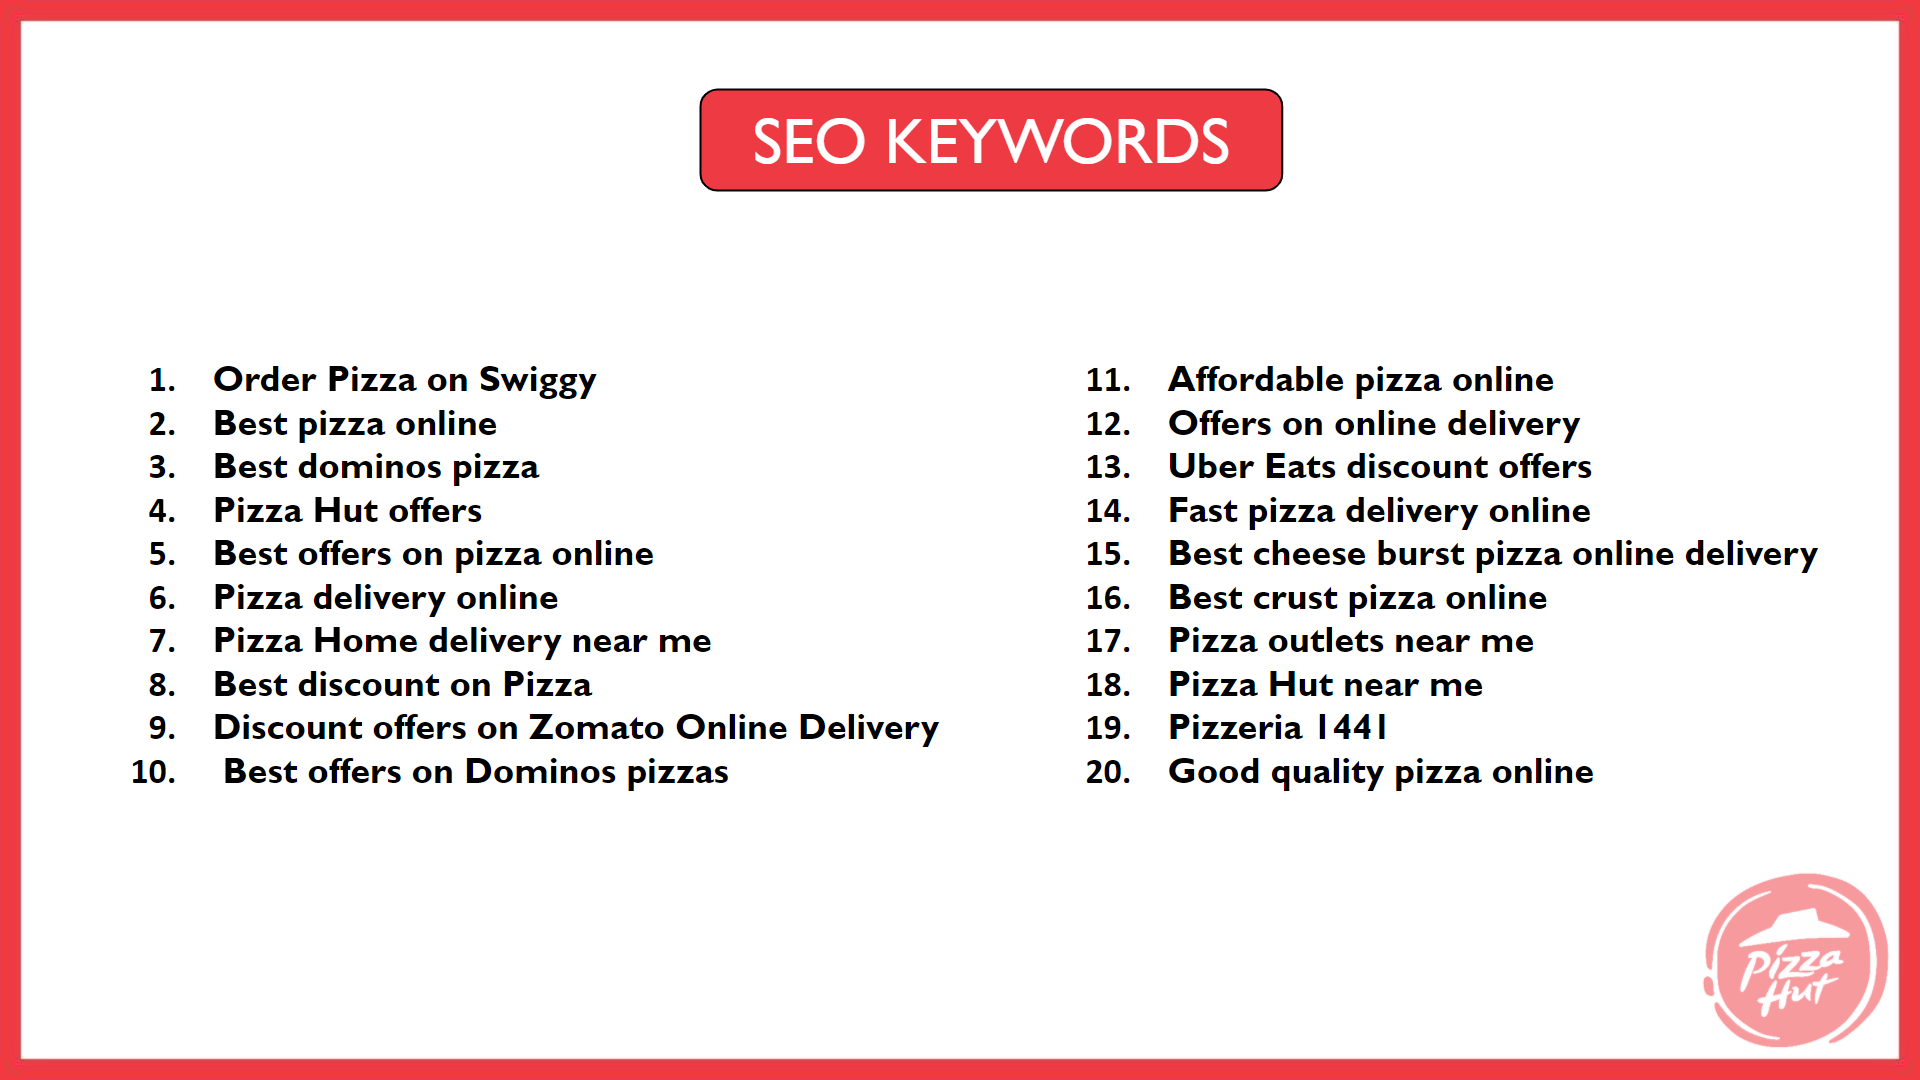 SEO keywords - Pizza Hut Marketing and Advertising Strategy